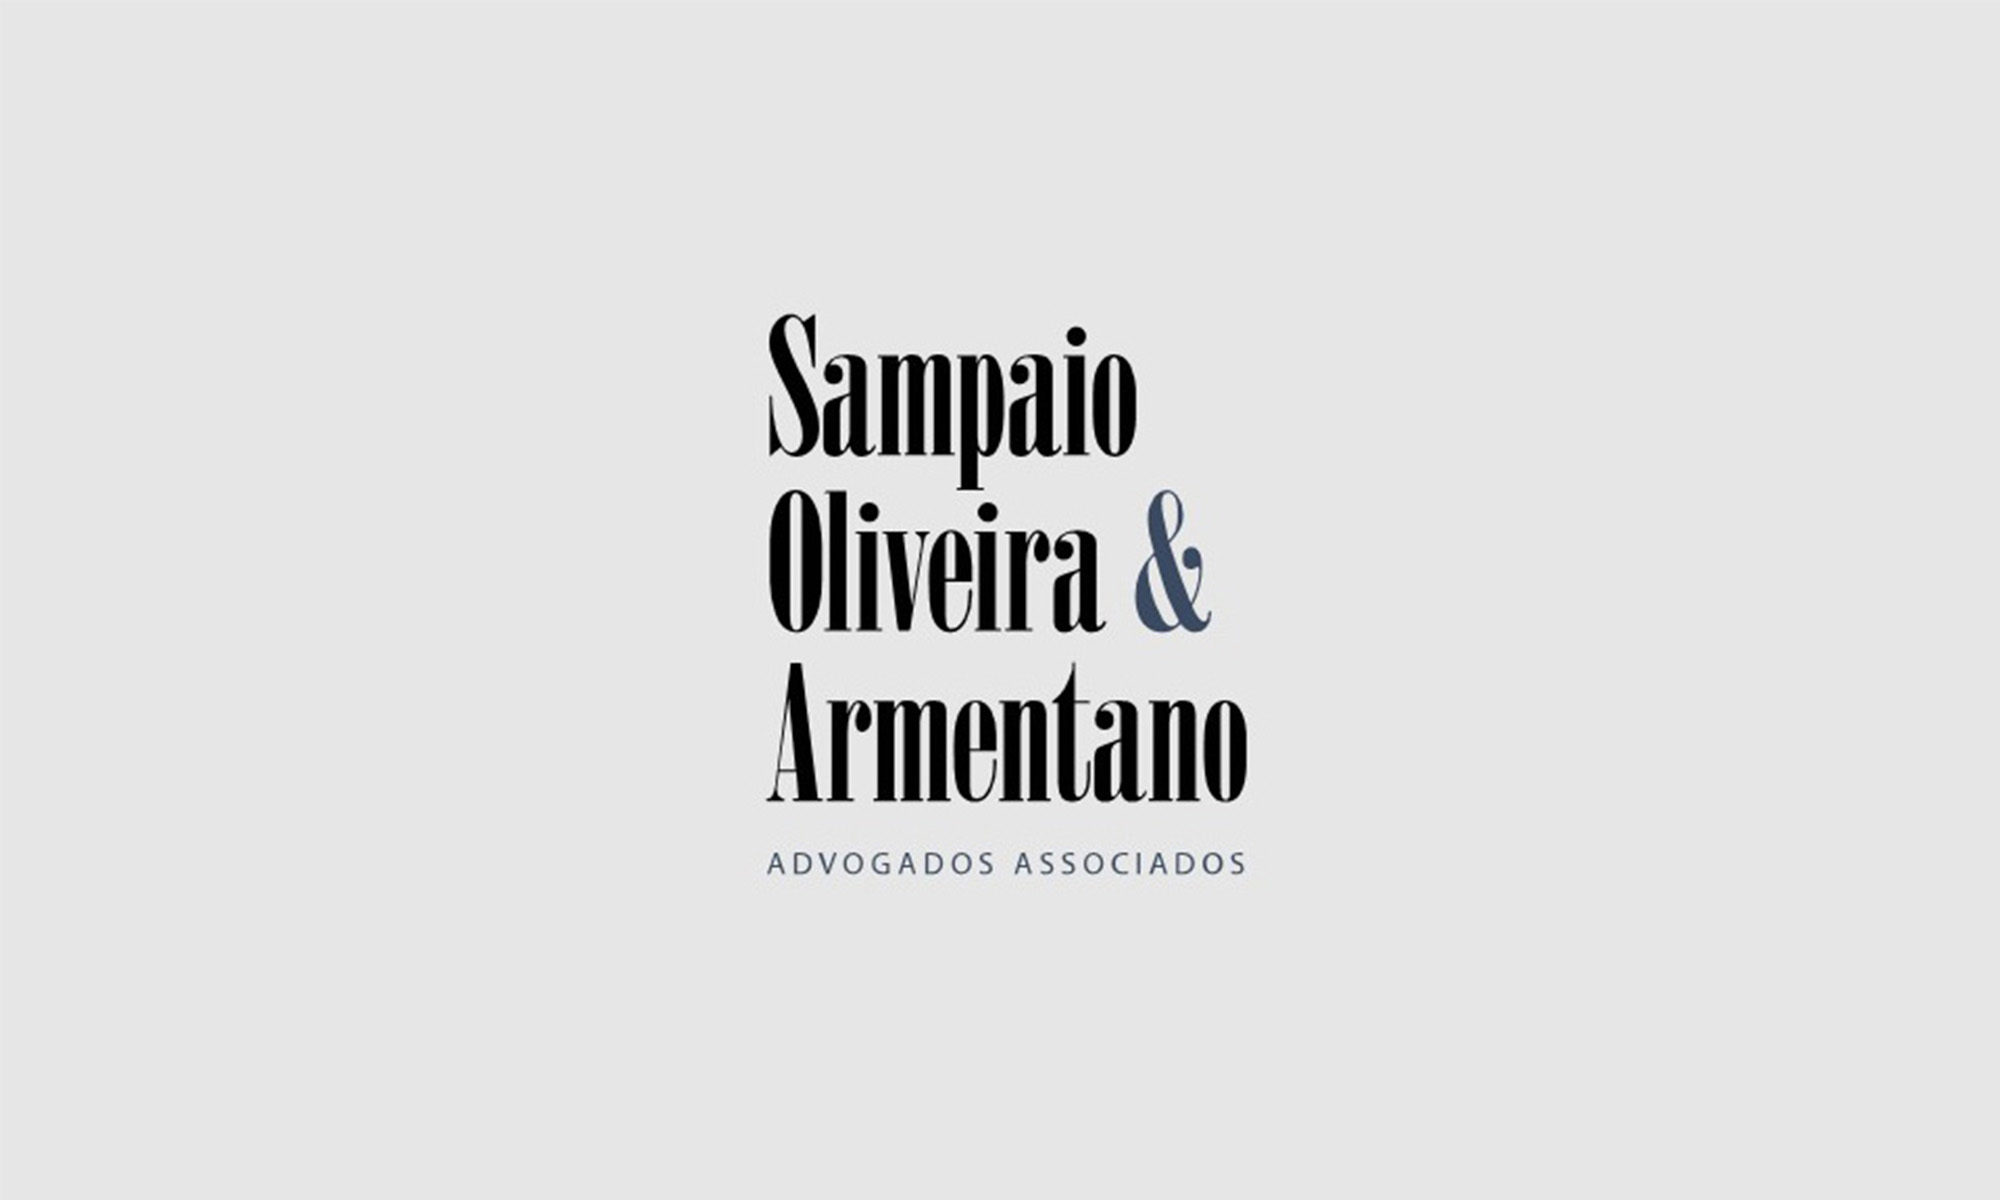 SAMPAIO, OLIVEIRA & ARMENTANO